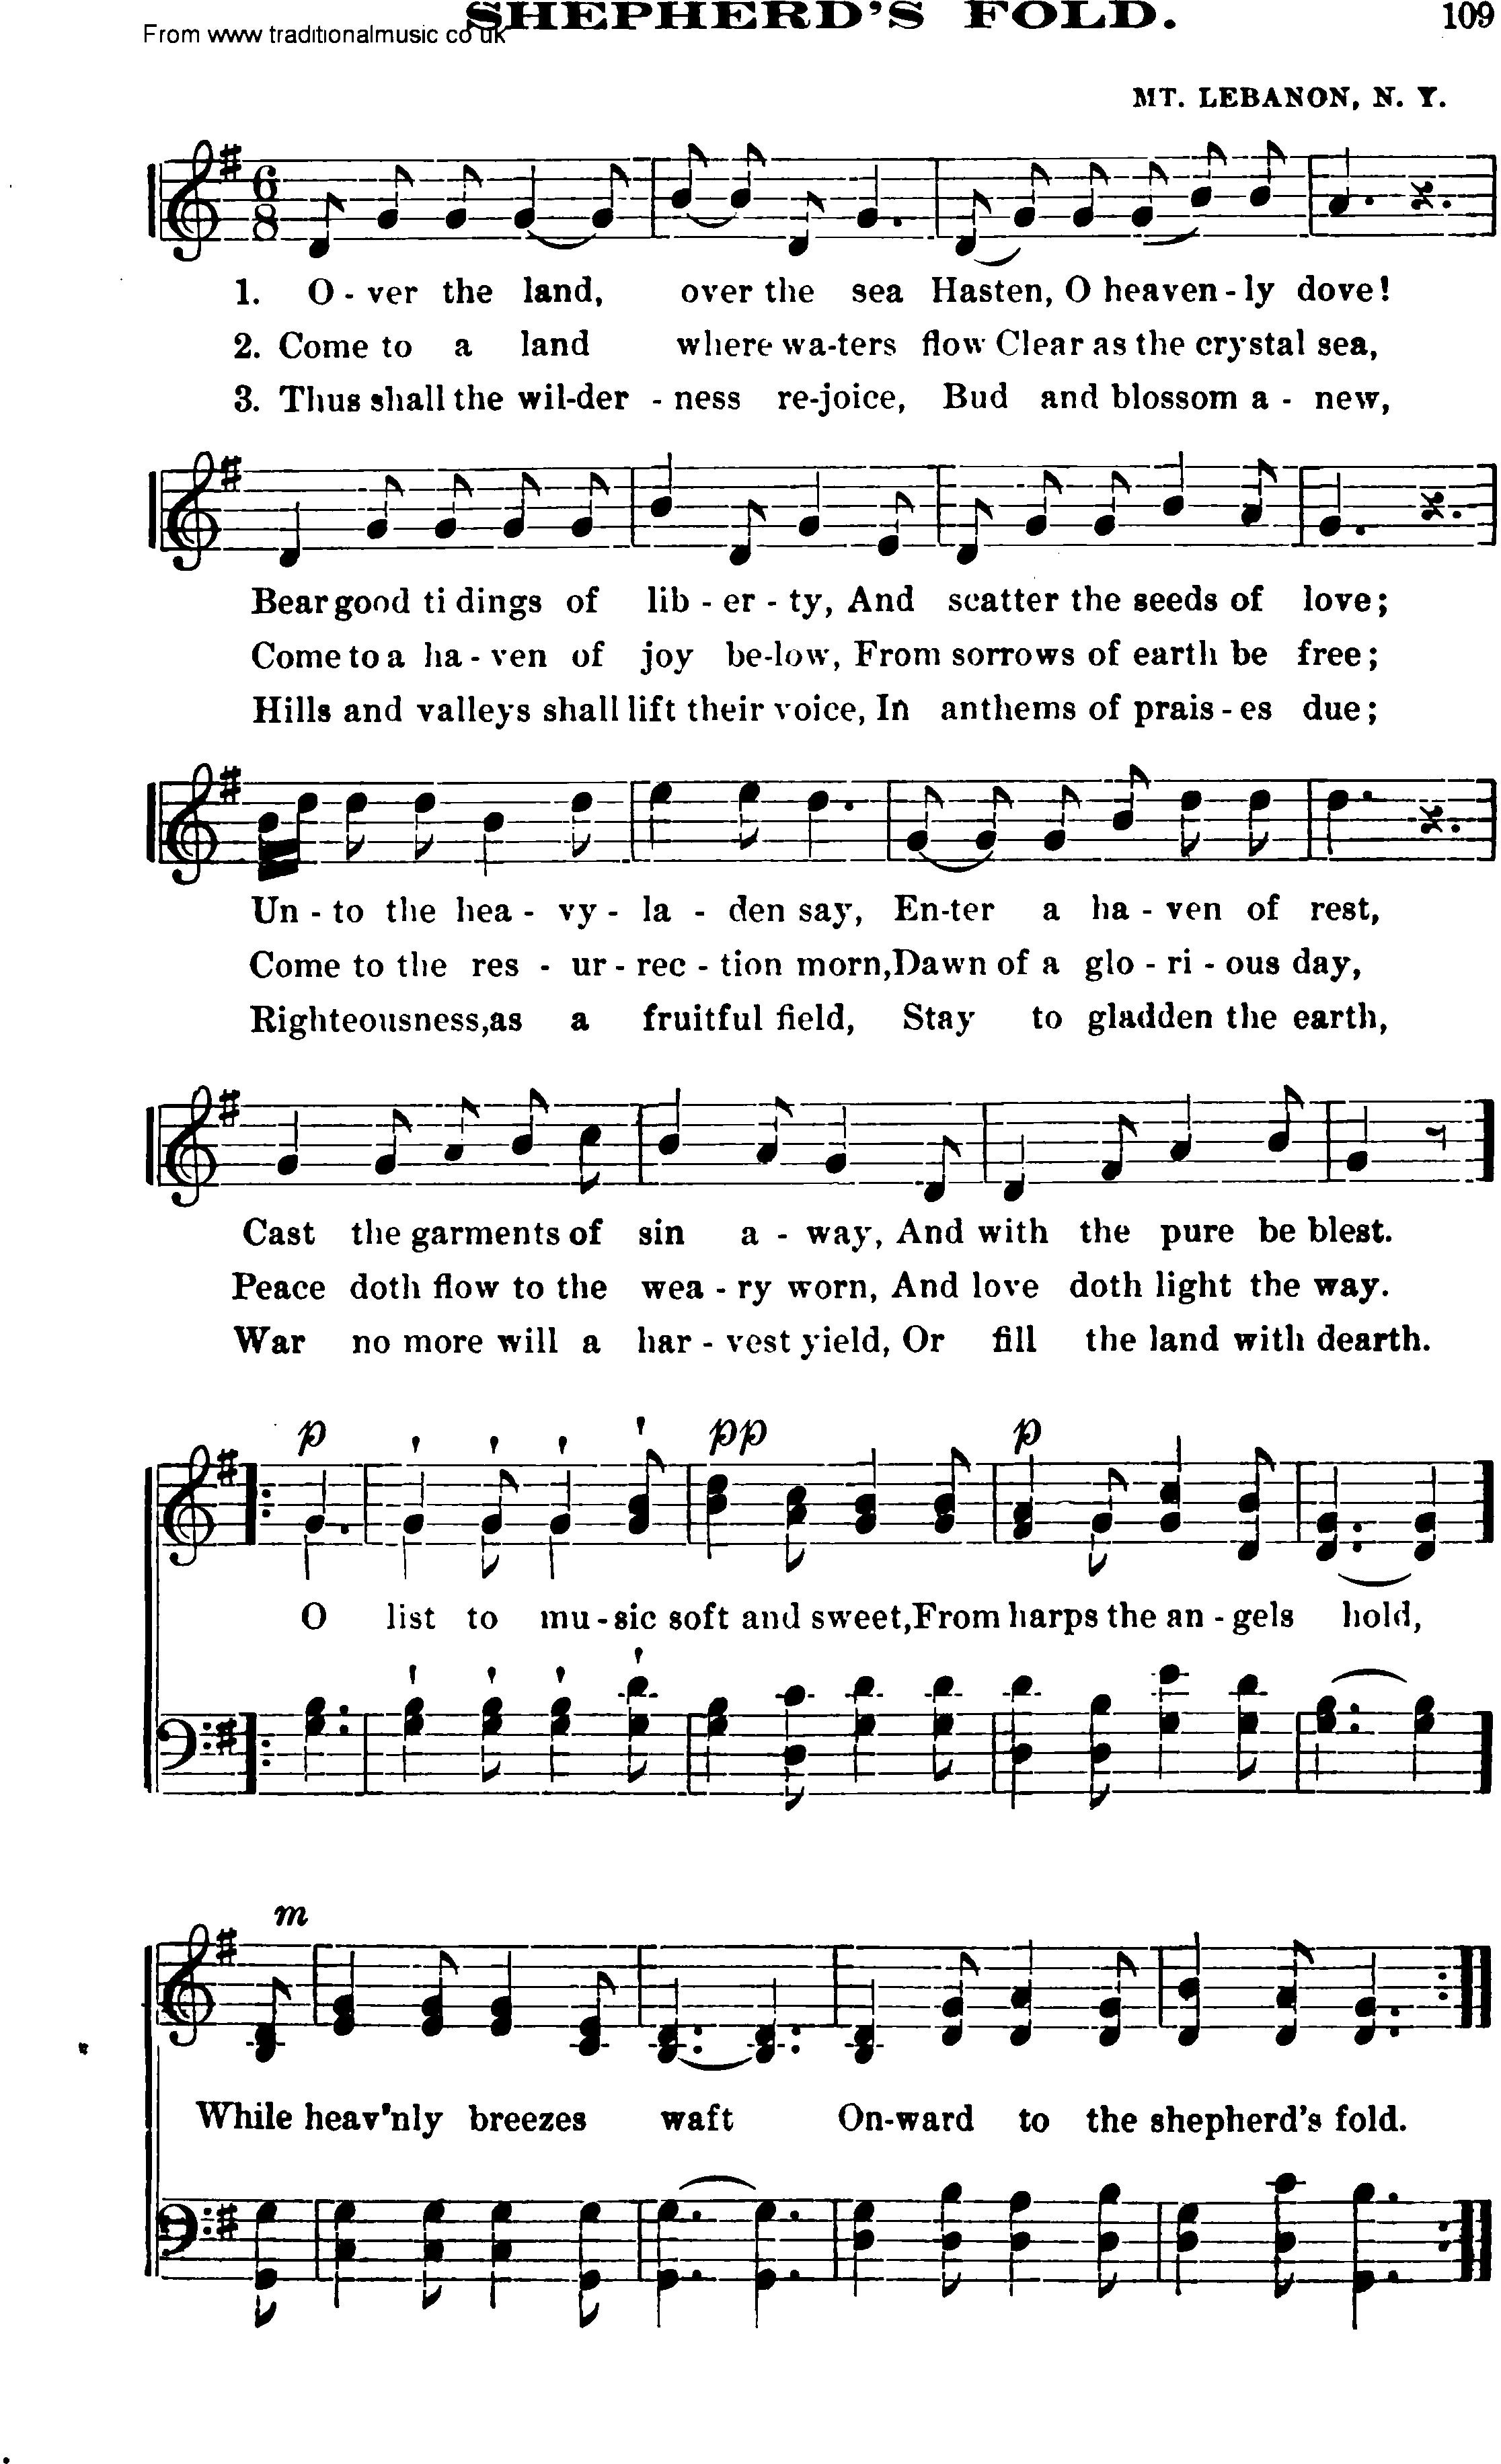 Shaker Music collection, Hymn: Shepherds Fold, sheetmusic and PDF